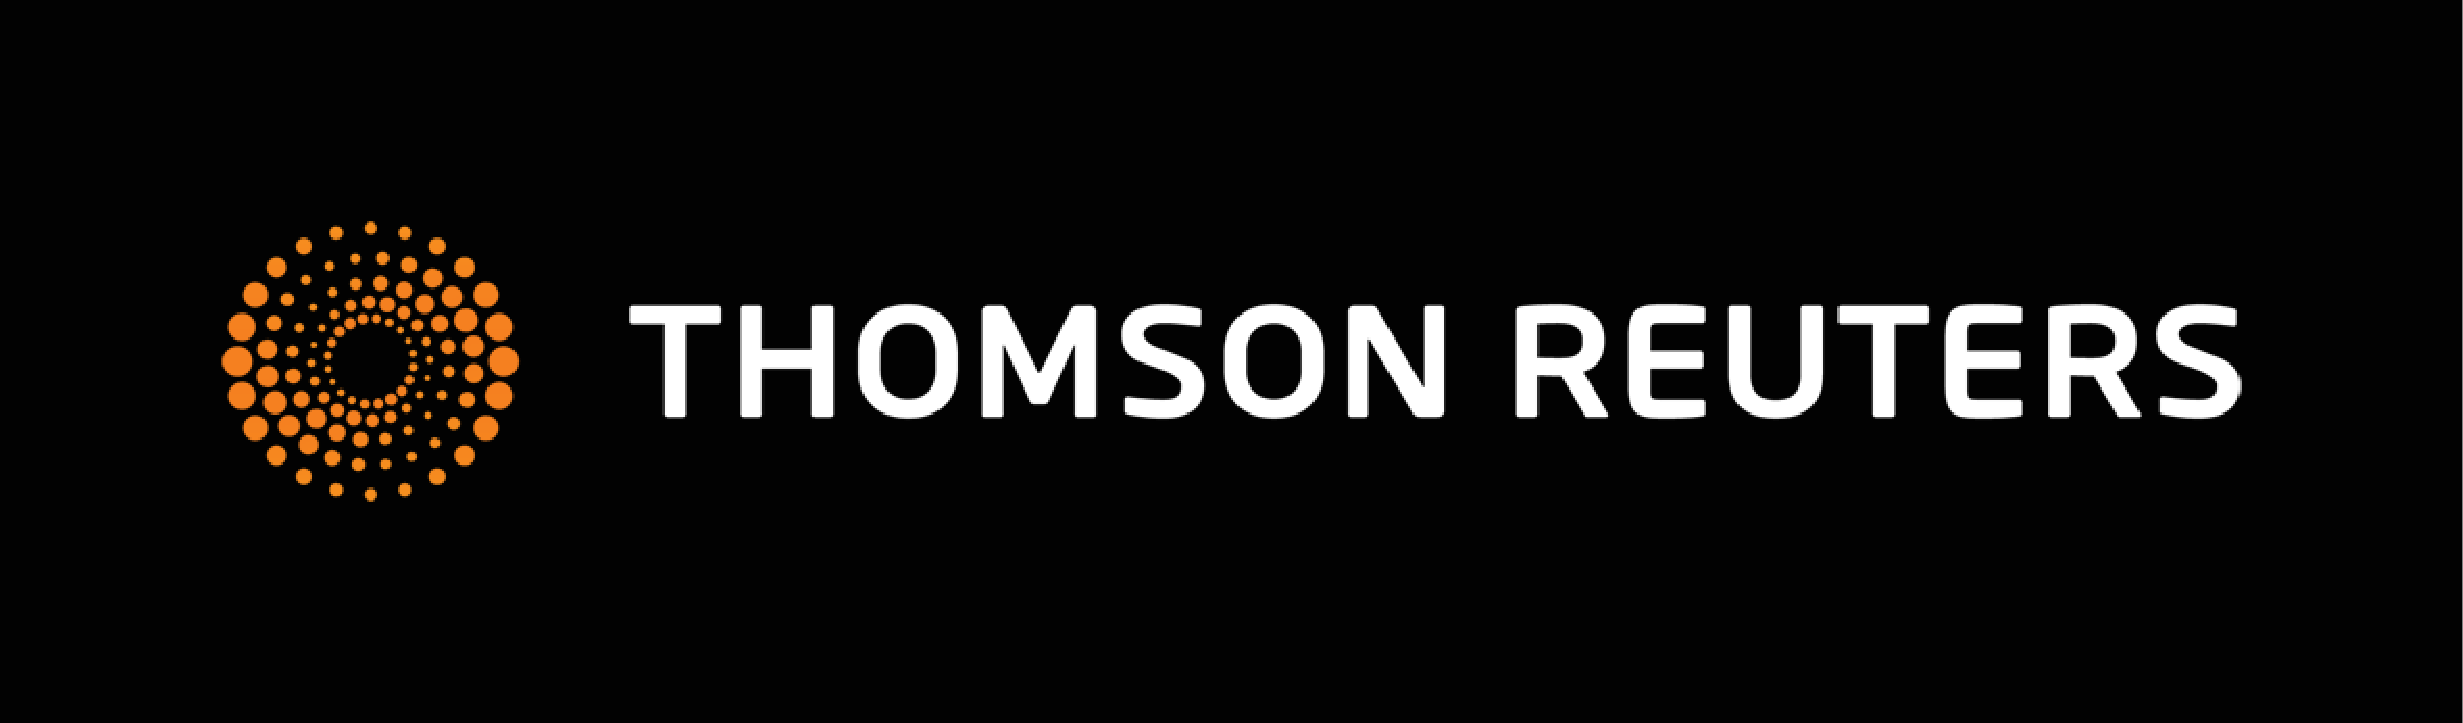 thomson reuters australia legal online betting